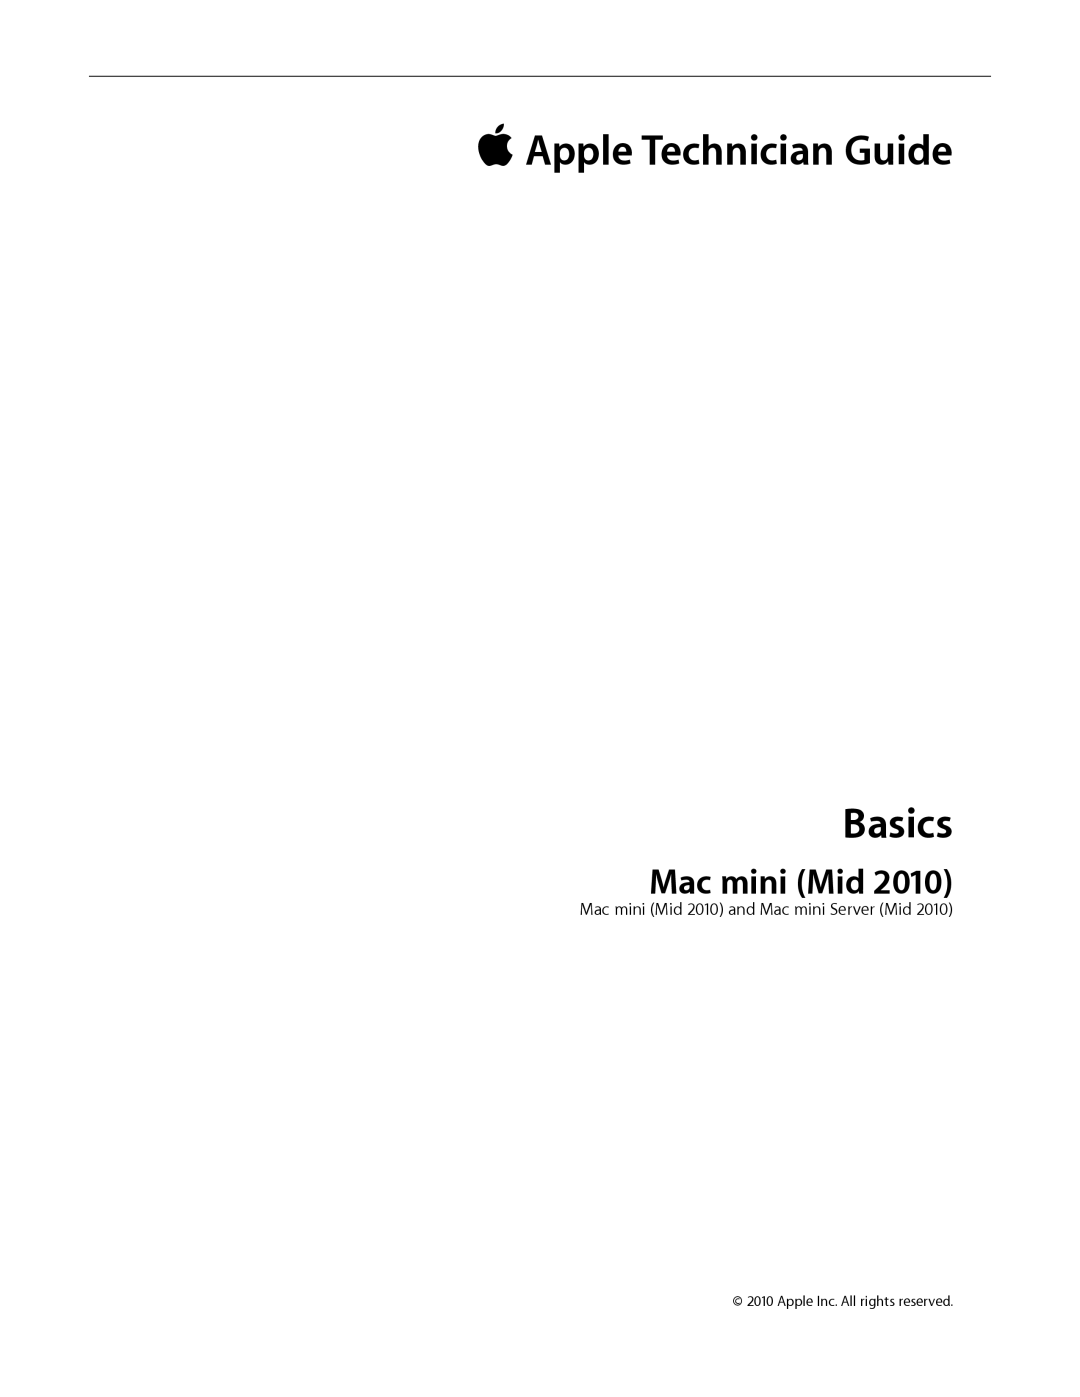 Apple Mac mini manual  Apple Technician Guide Basics 